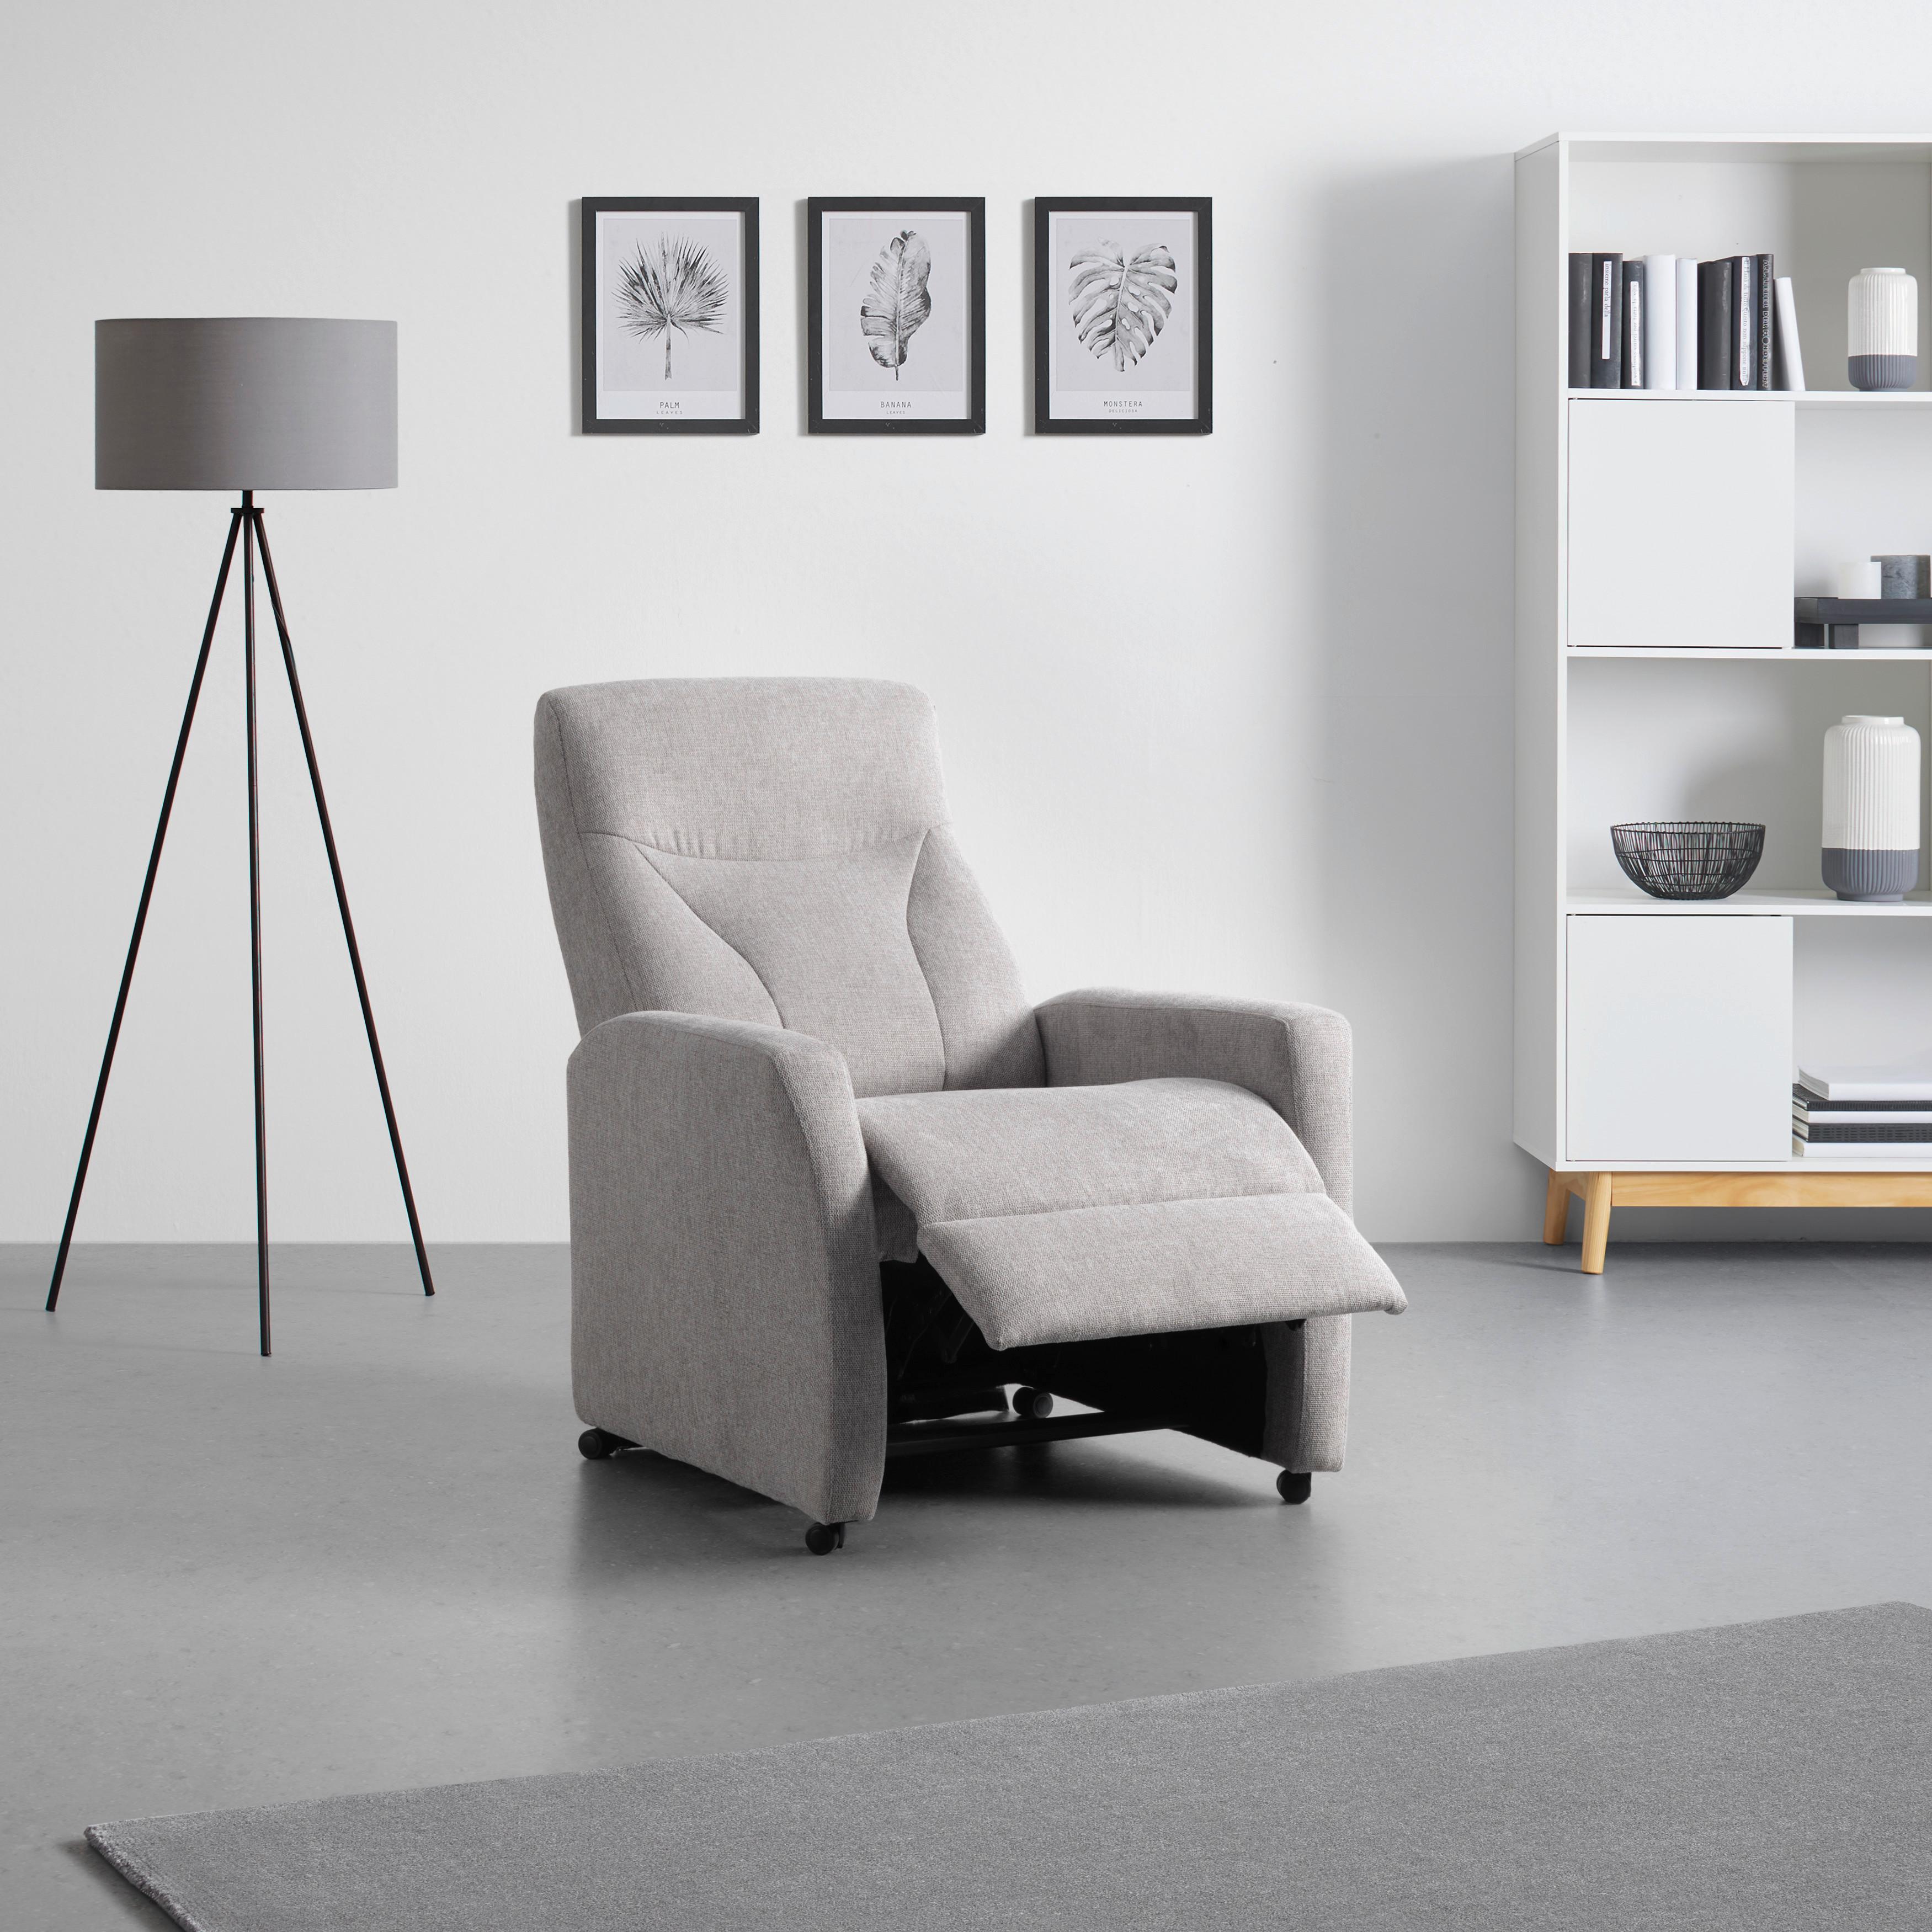 Relaxsessel Times in Grau - Grau, MODERN, Kunststoff/Textil (76/110/80cm) - Modern Living